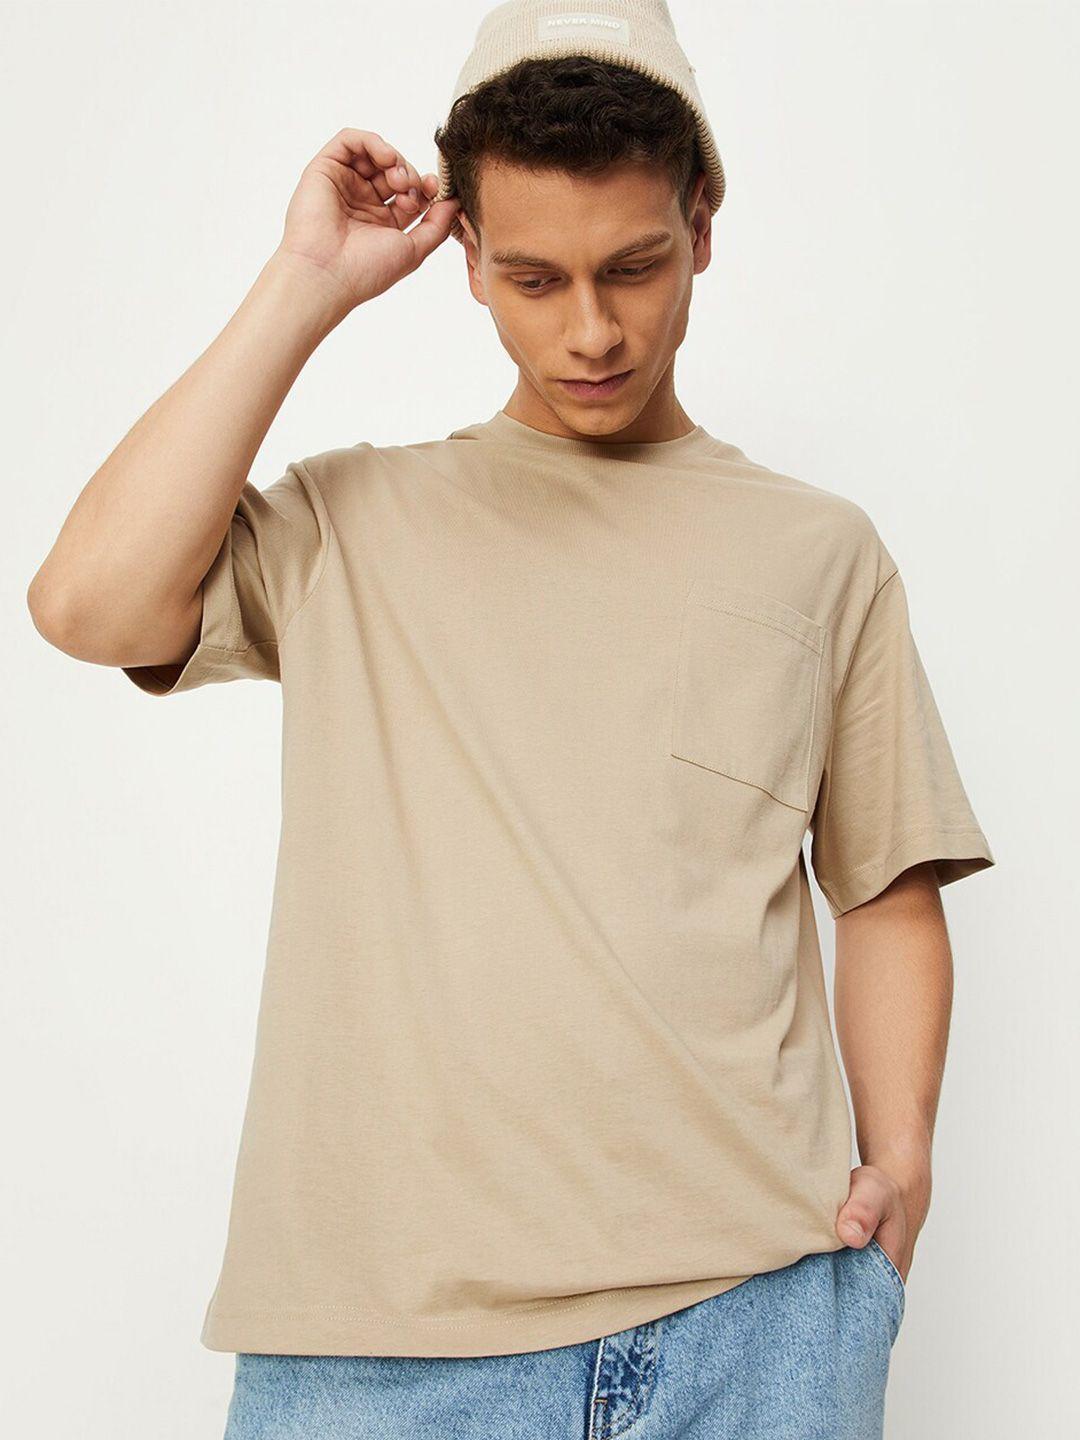 max men high neck drop shoulder sleeves cotton casual t-shirt